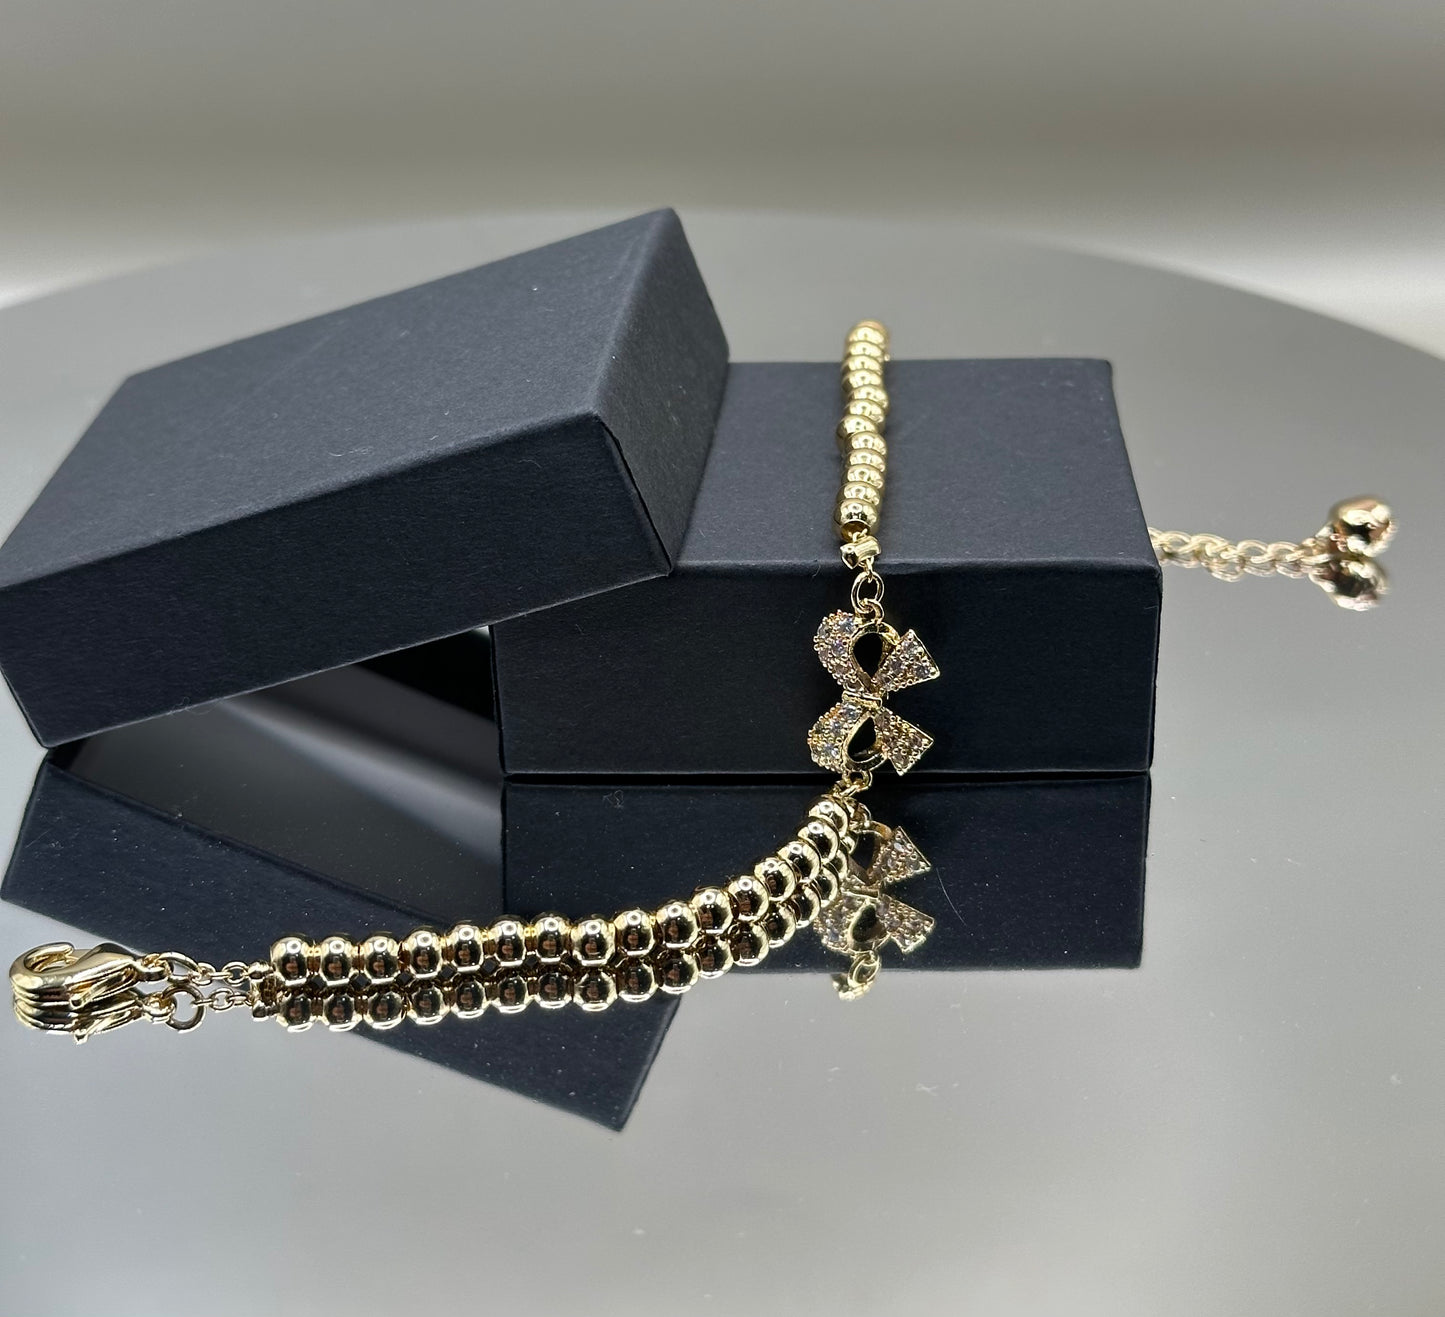 18k Gold-filled Knot bracelet